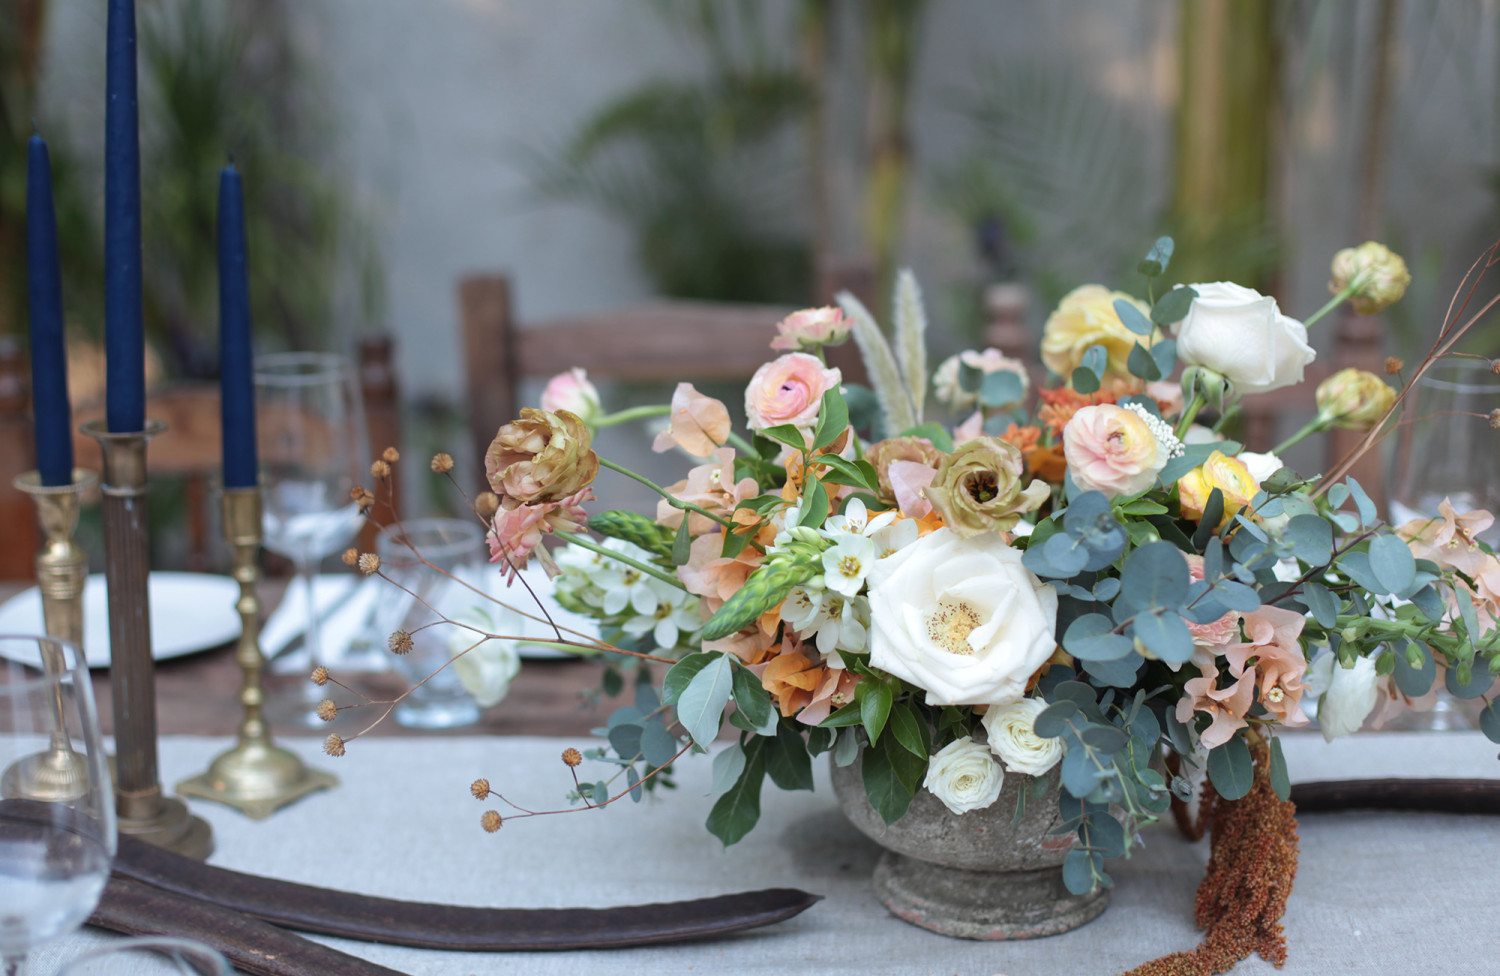 A flower arrangement on a table